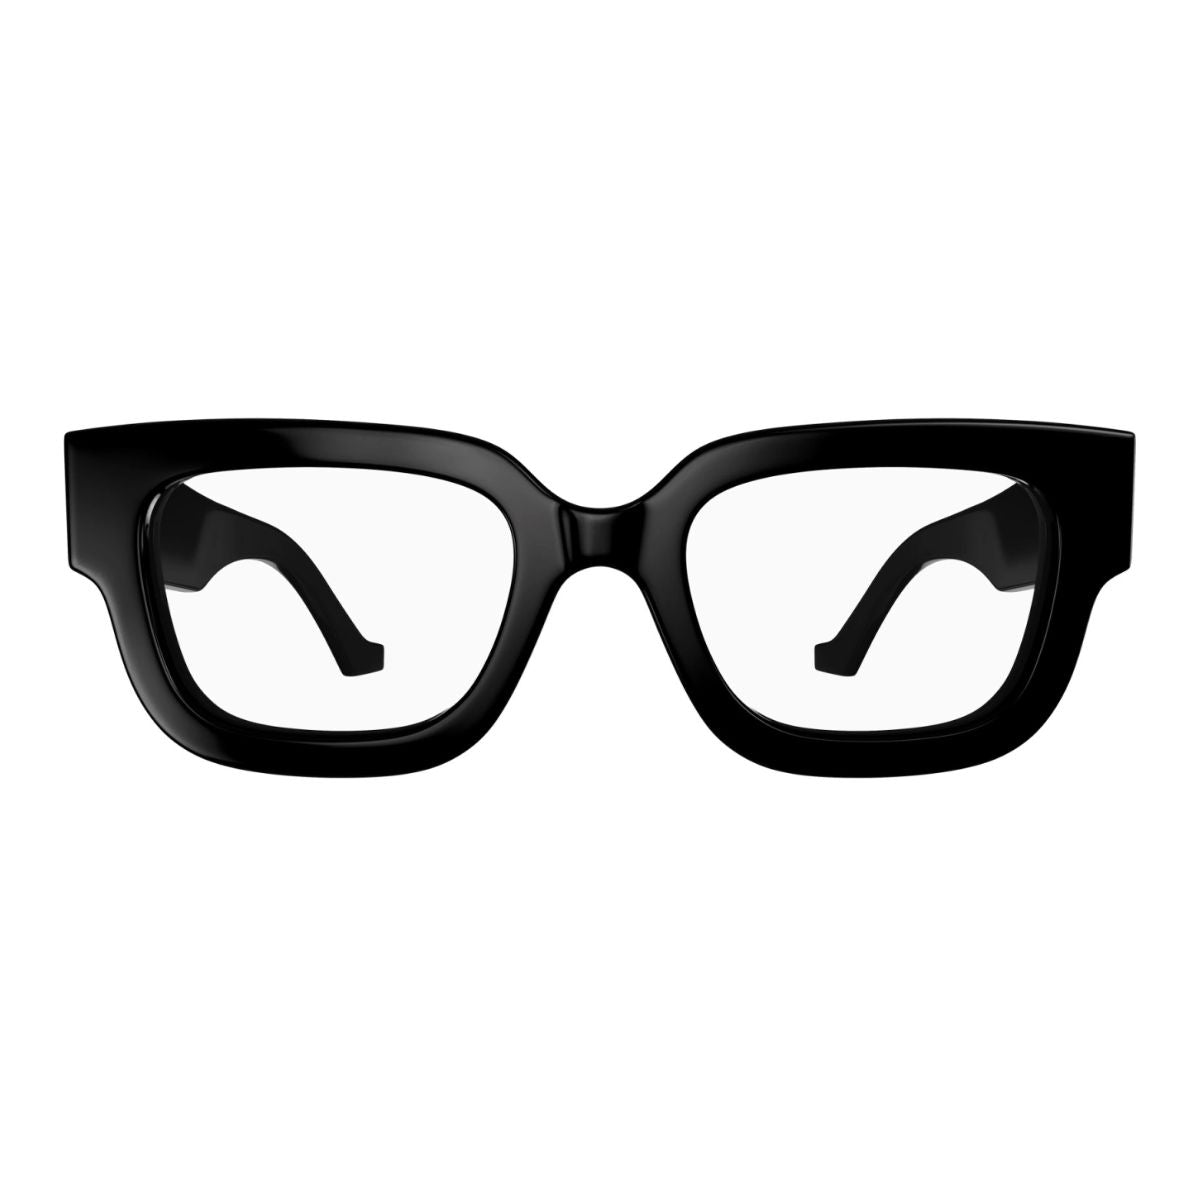 "Crafted Gucci Eyeglasses - Model 1548O 001 frames designed for fashion-forward individuals seeking sophistication."